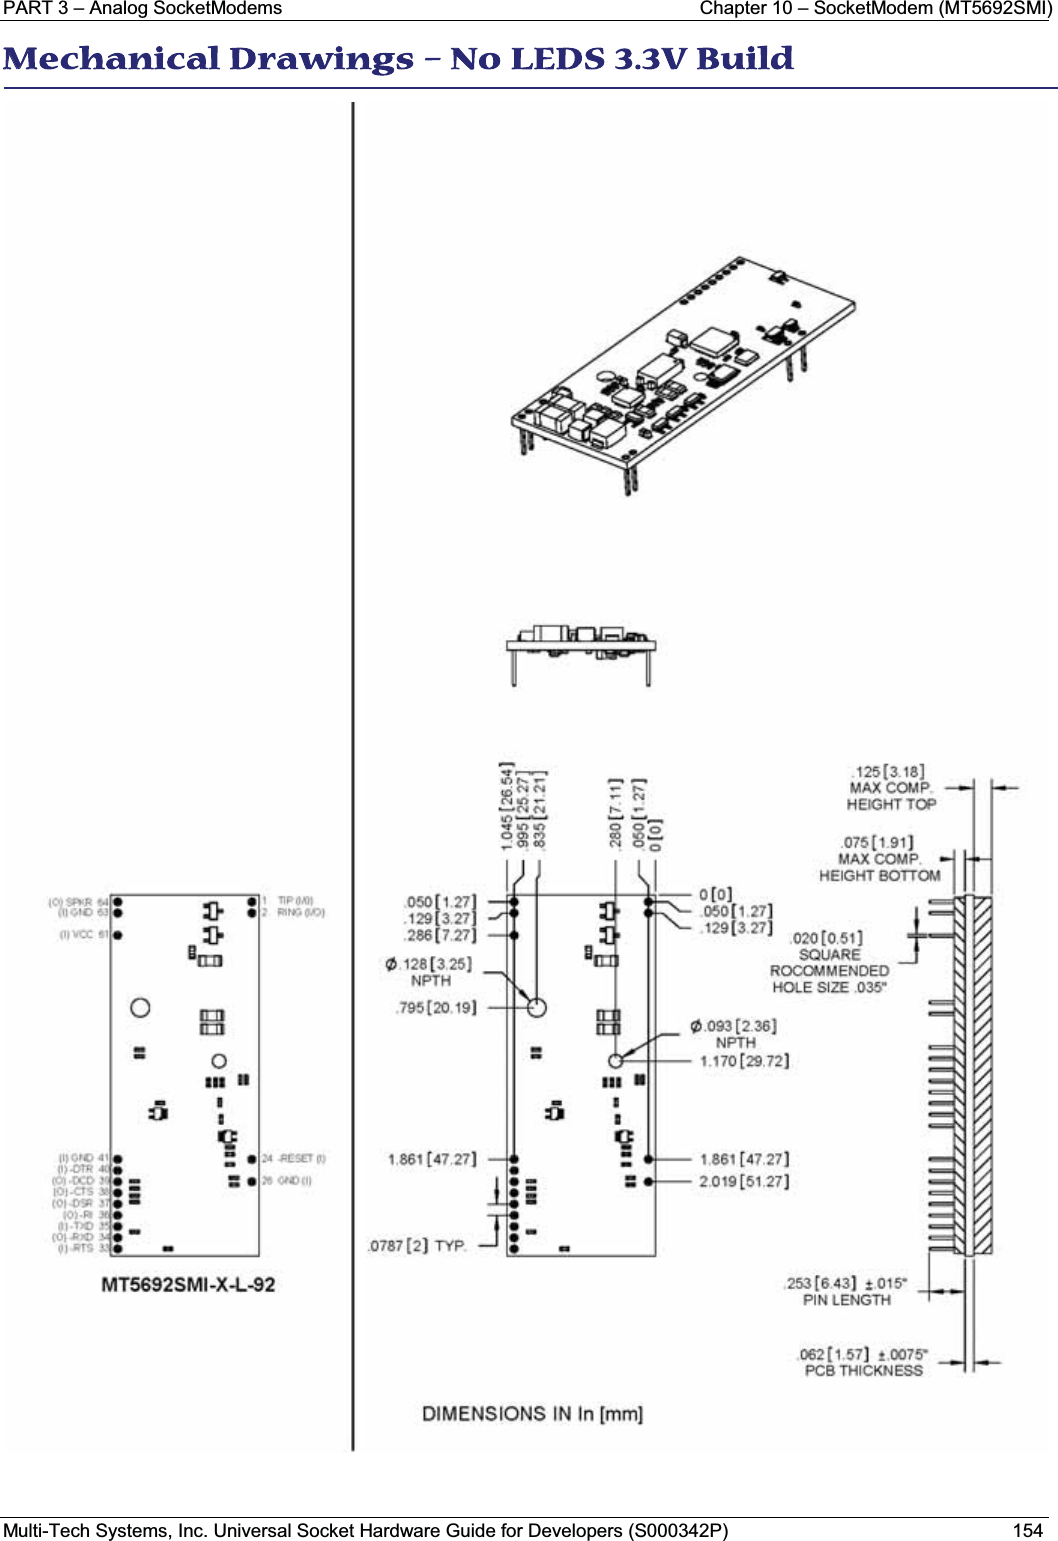 PART 3 – Analog SocketModems Chapter 10 – SocketModem (MT5692SMI)Multi-Tech Systems, Inc. Universal Socket Hardware Guide for Developers (S000342P) 154MMechanical Drawings – No LEDS 3.3V Build 